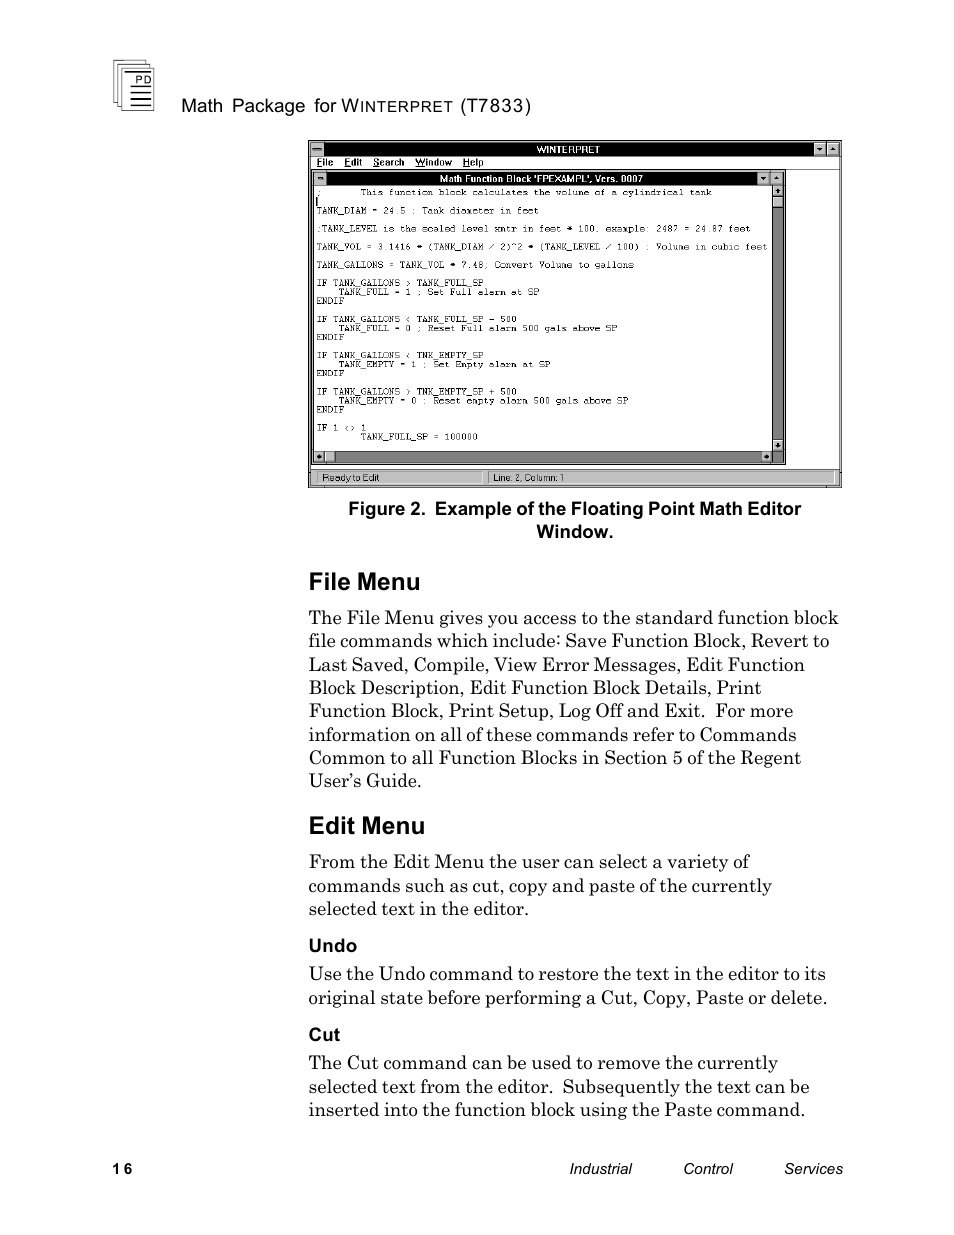 File menu, Edit menu | Rockwell Automation T7833 ICS Regent+Plus Math Package for Winternet User Manual | Page 16 / 26